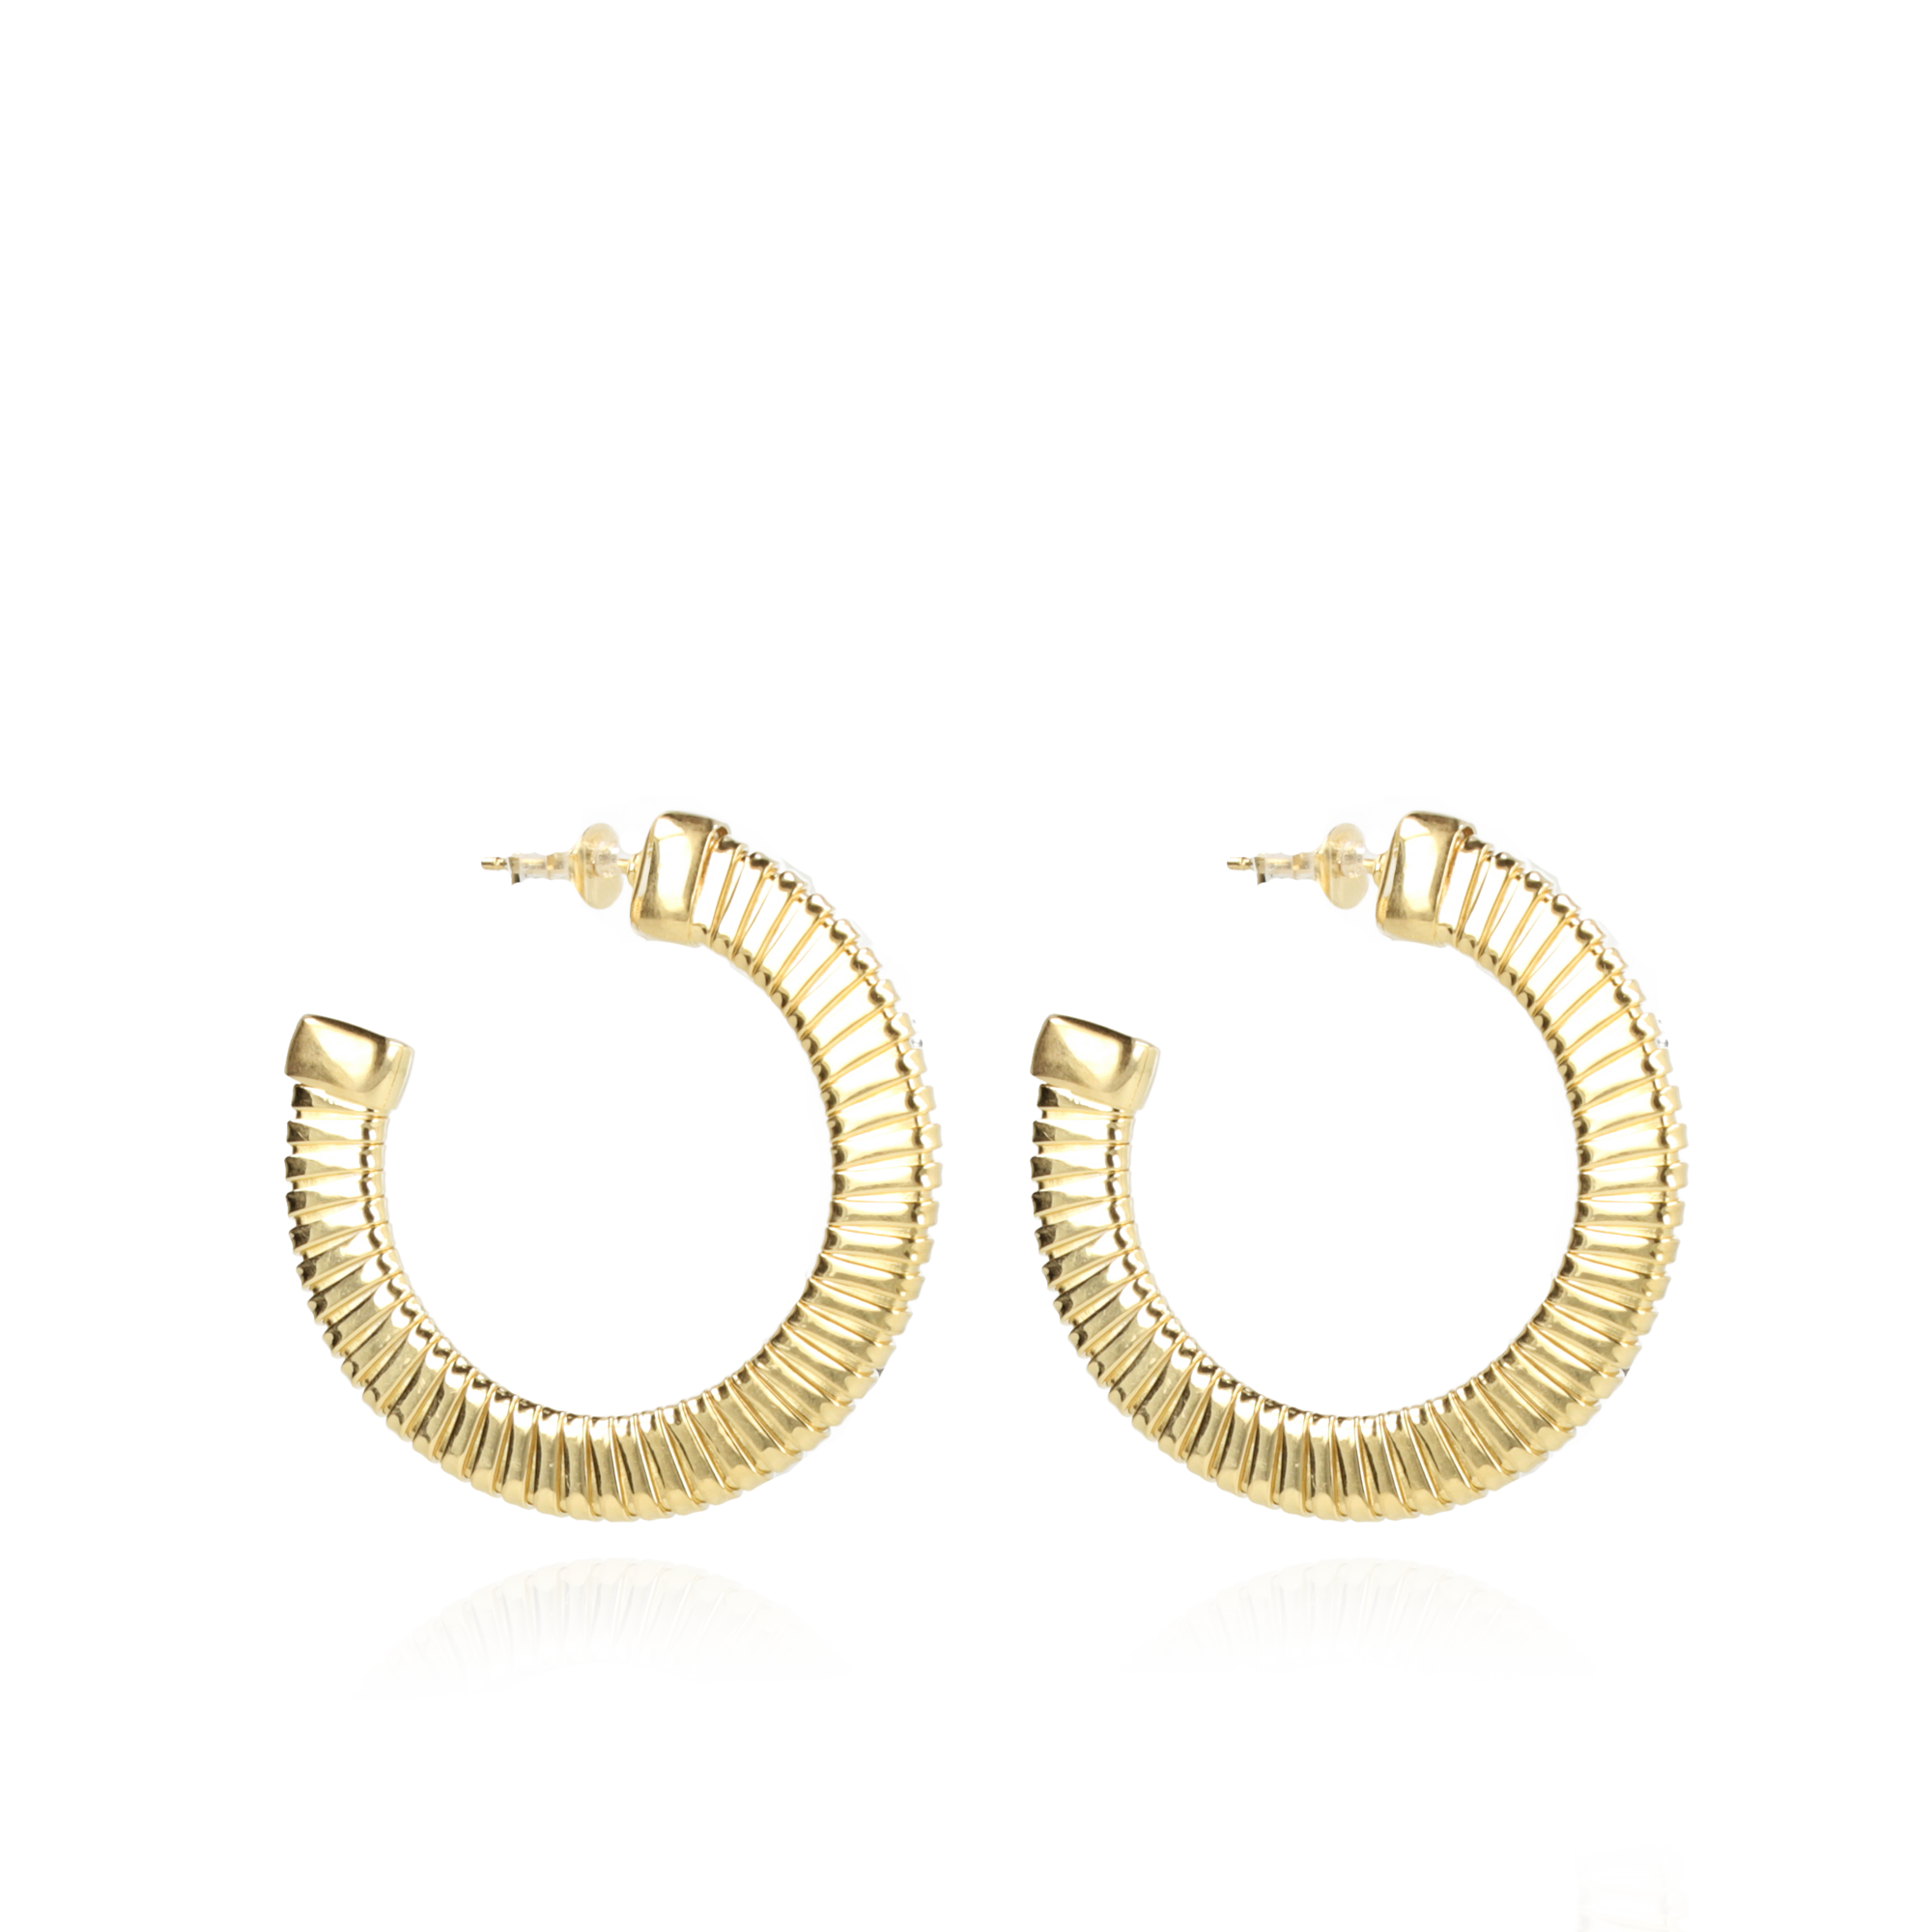 Gold earrings Striped Creole Scarlet